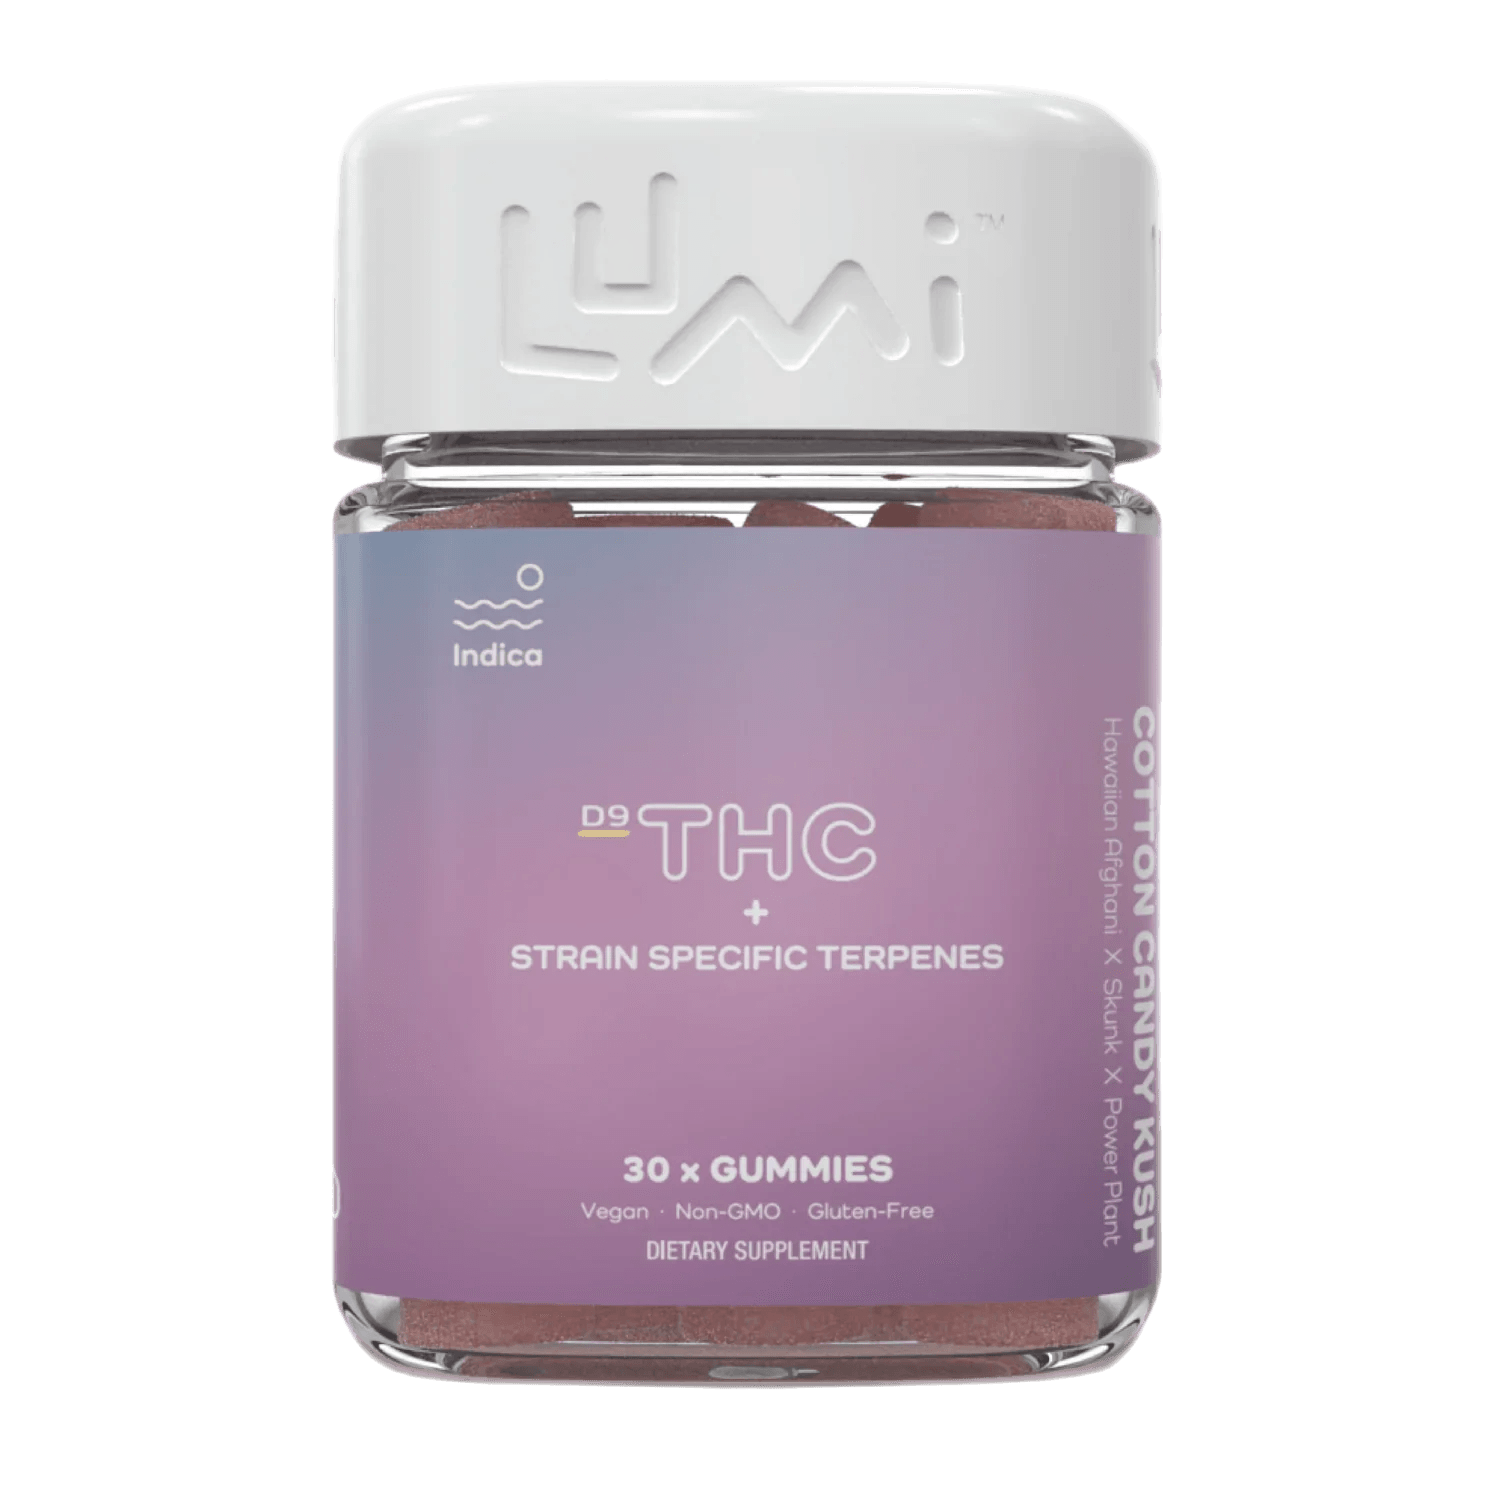 Lumi D9 Gummies + Strain Specific Terpenes 30 ct - Coastal Hemp Co